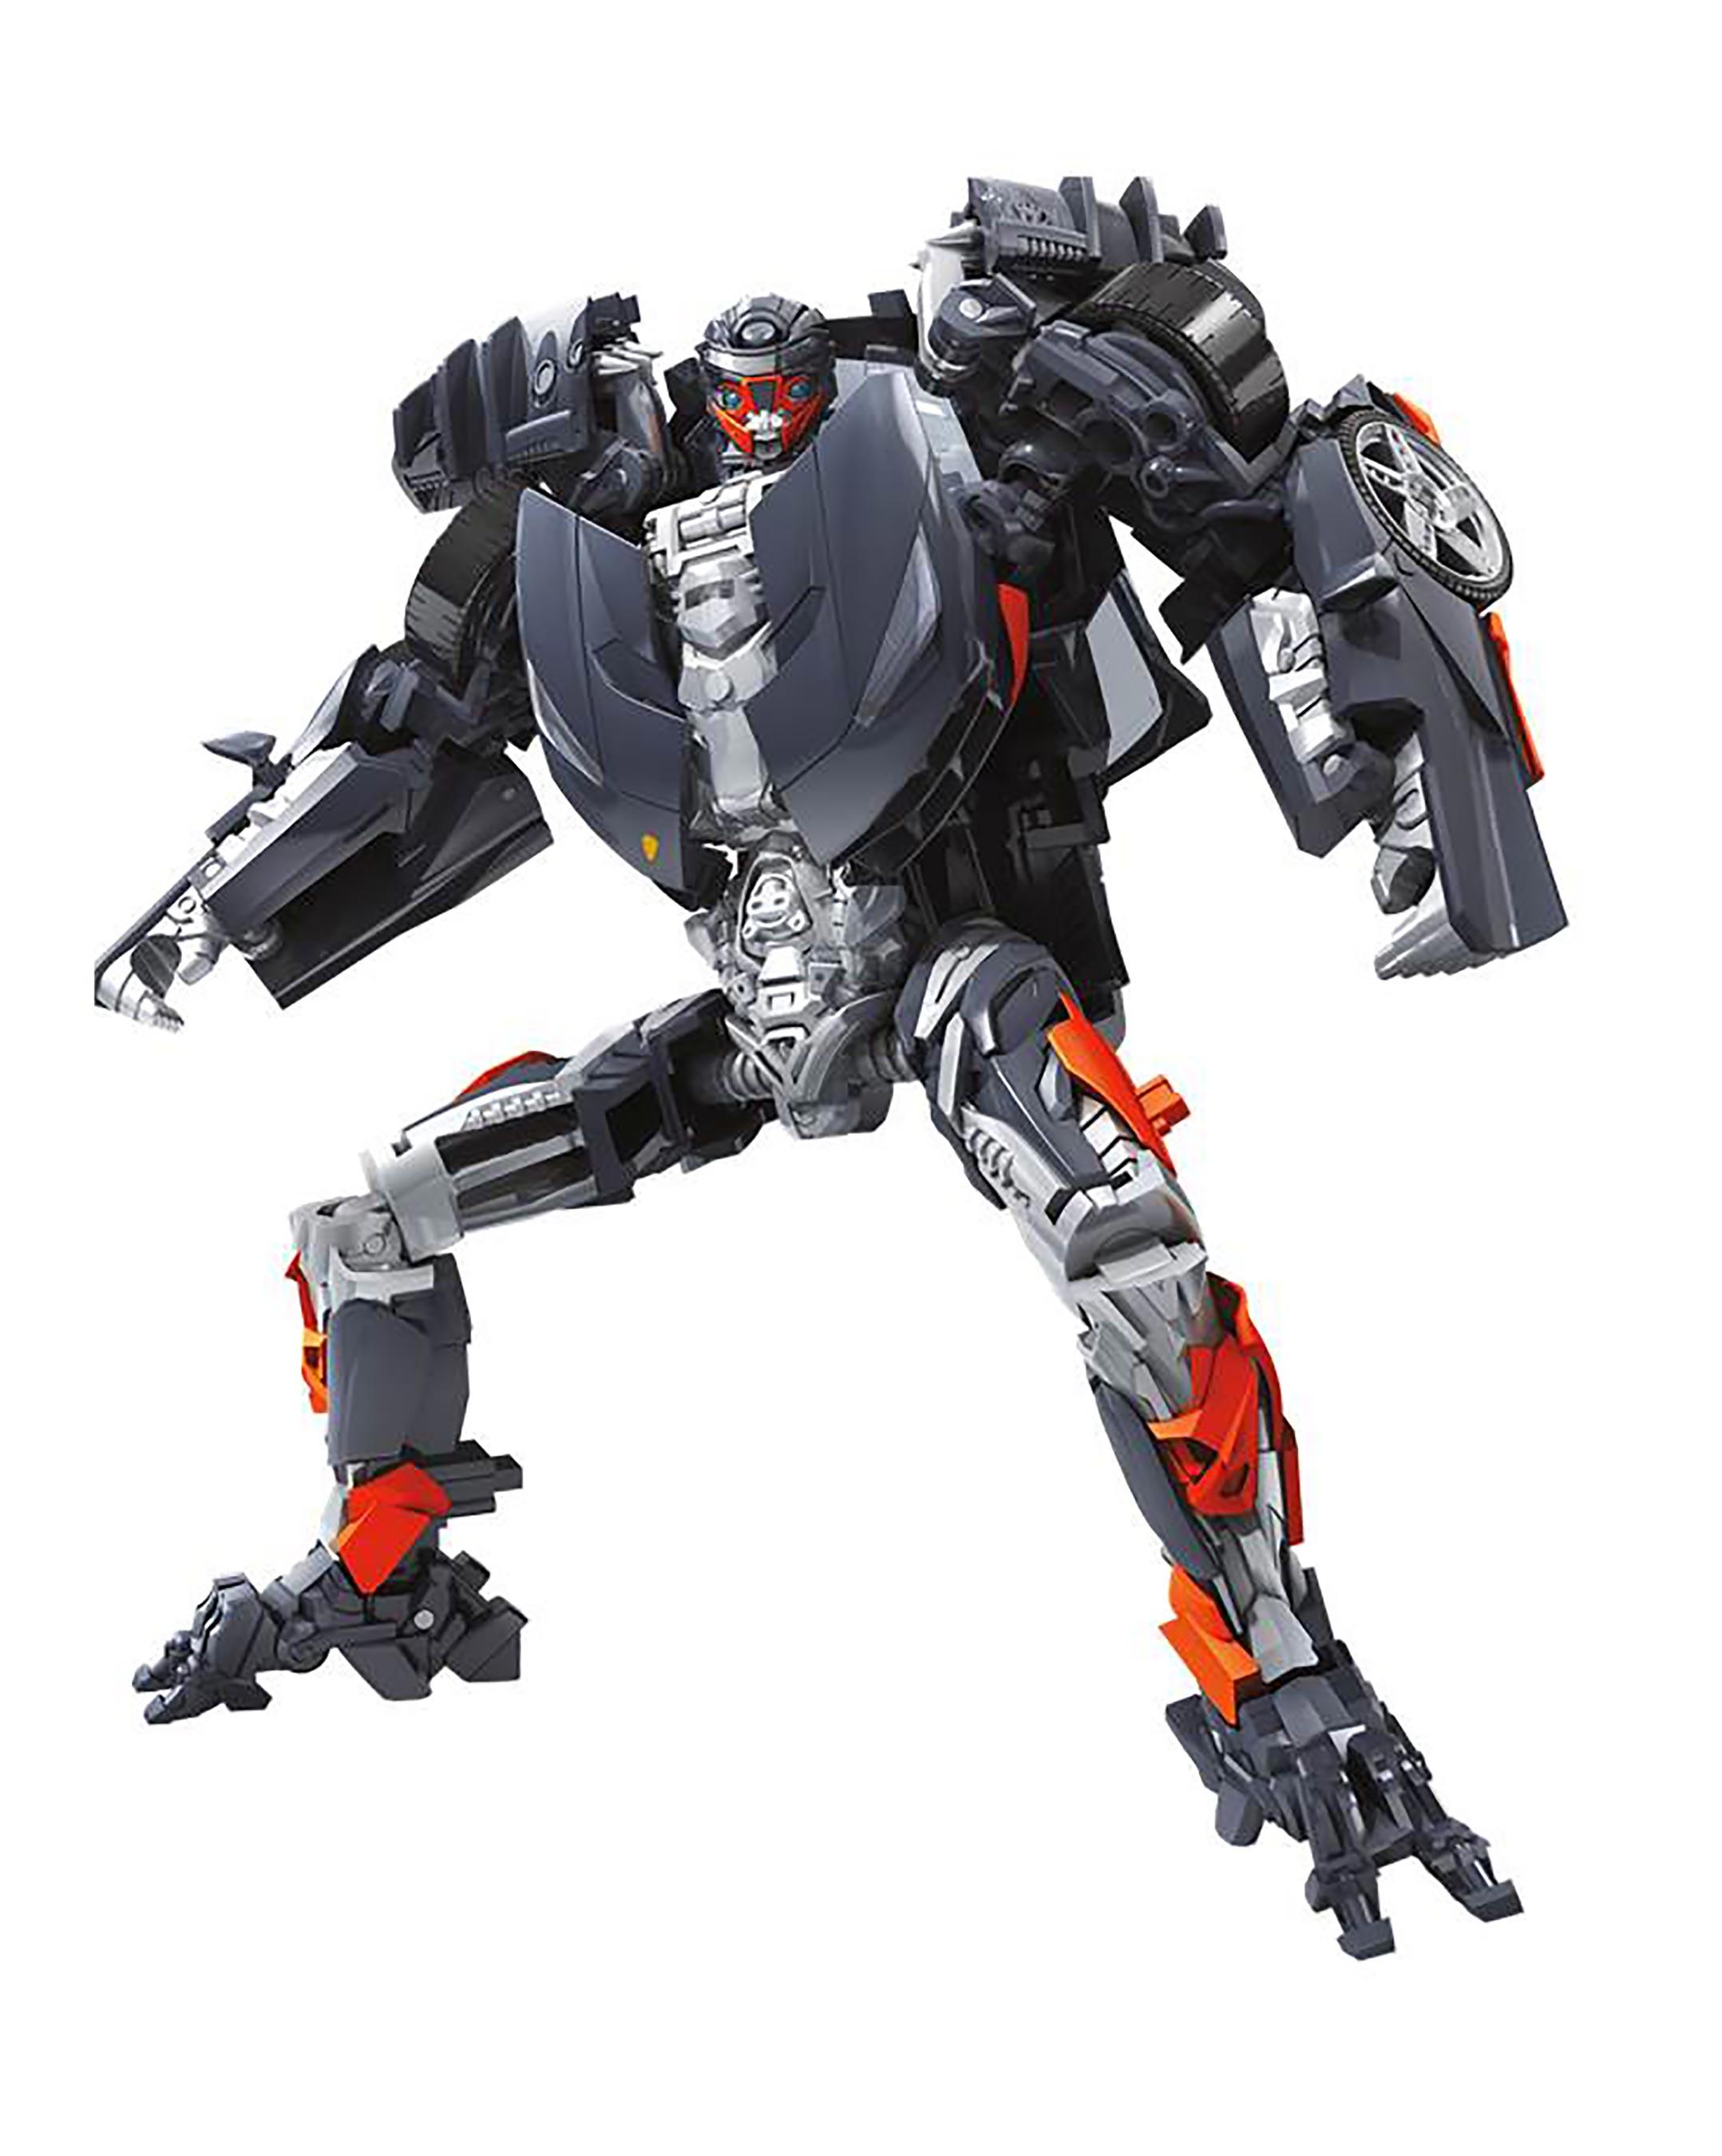 Transformers: The Last Knight new Hasbro toys revealed